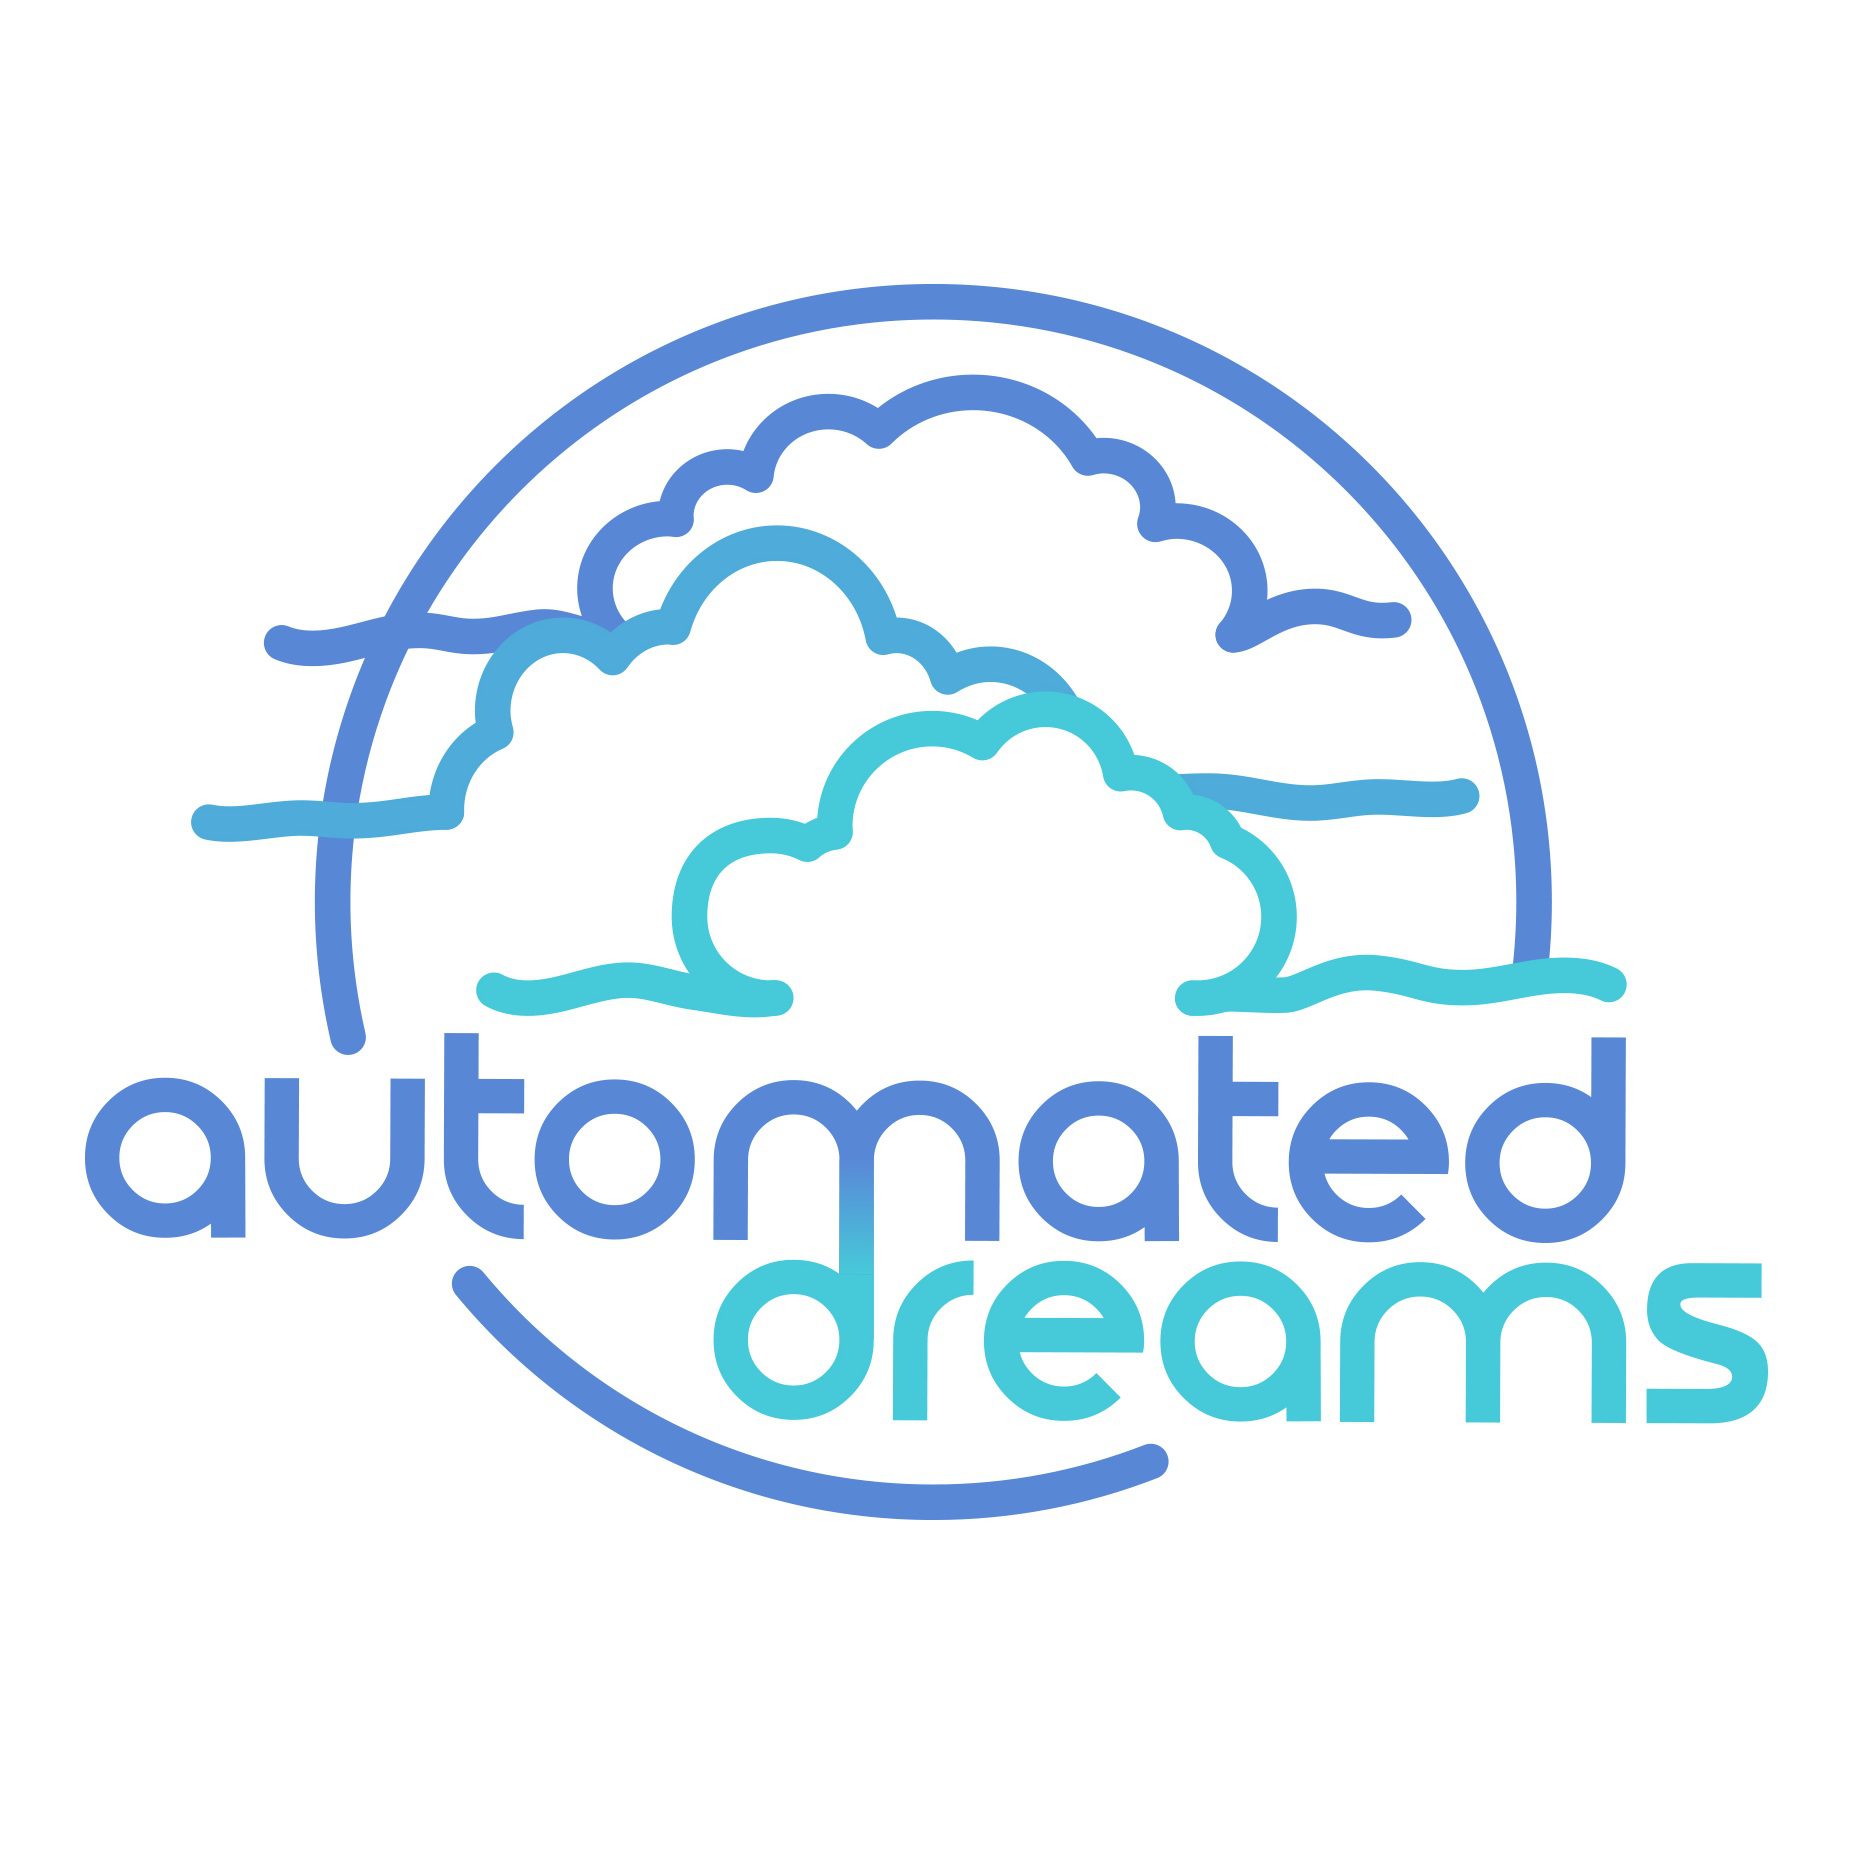 automated dreams logo